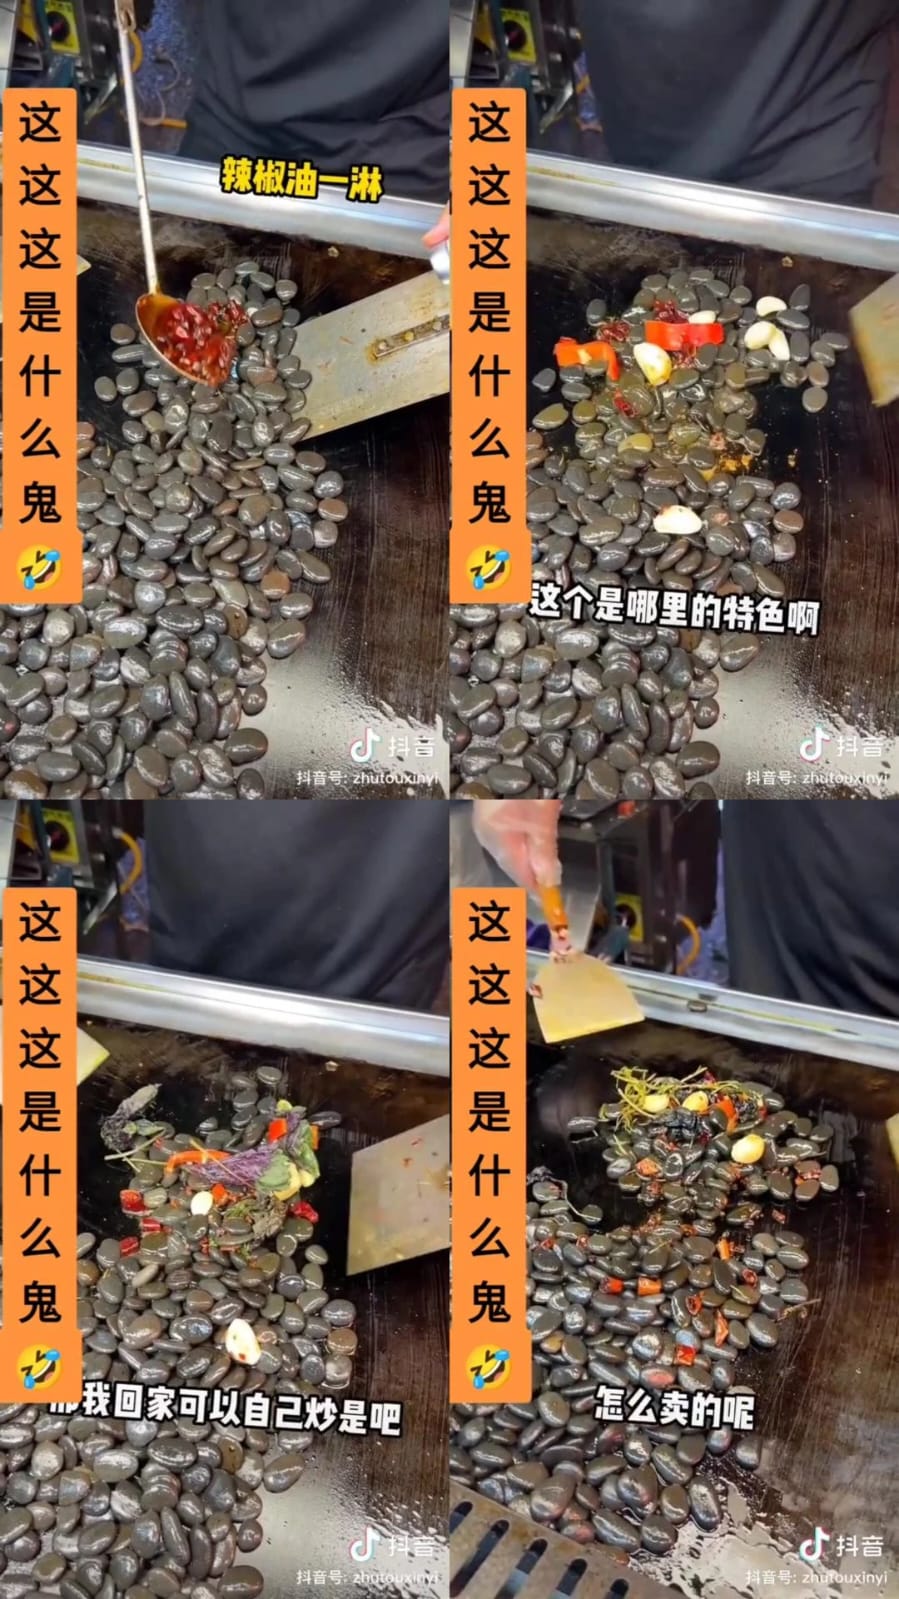 Heboh jajanan tumis batu di China, bikin bingung mau makannya gimana